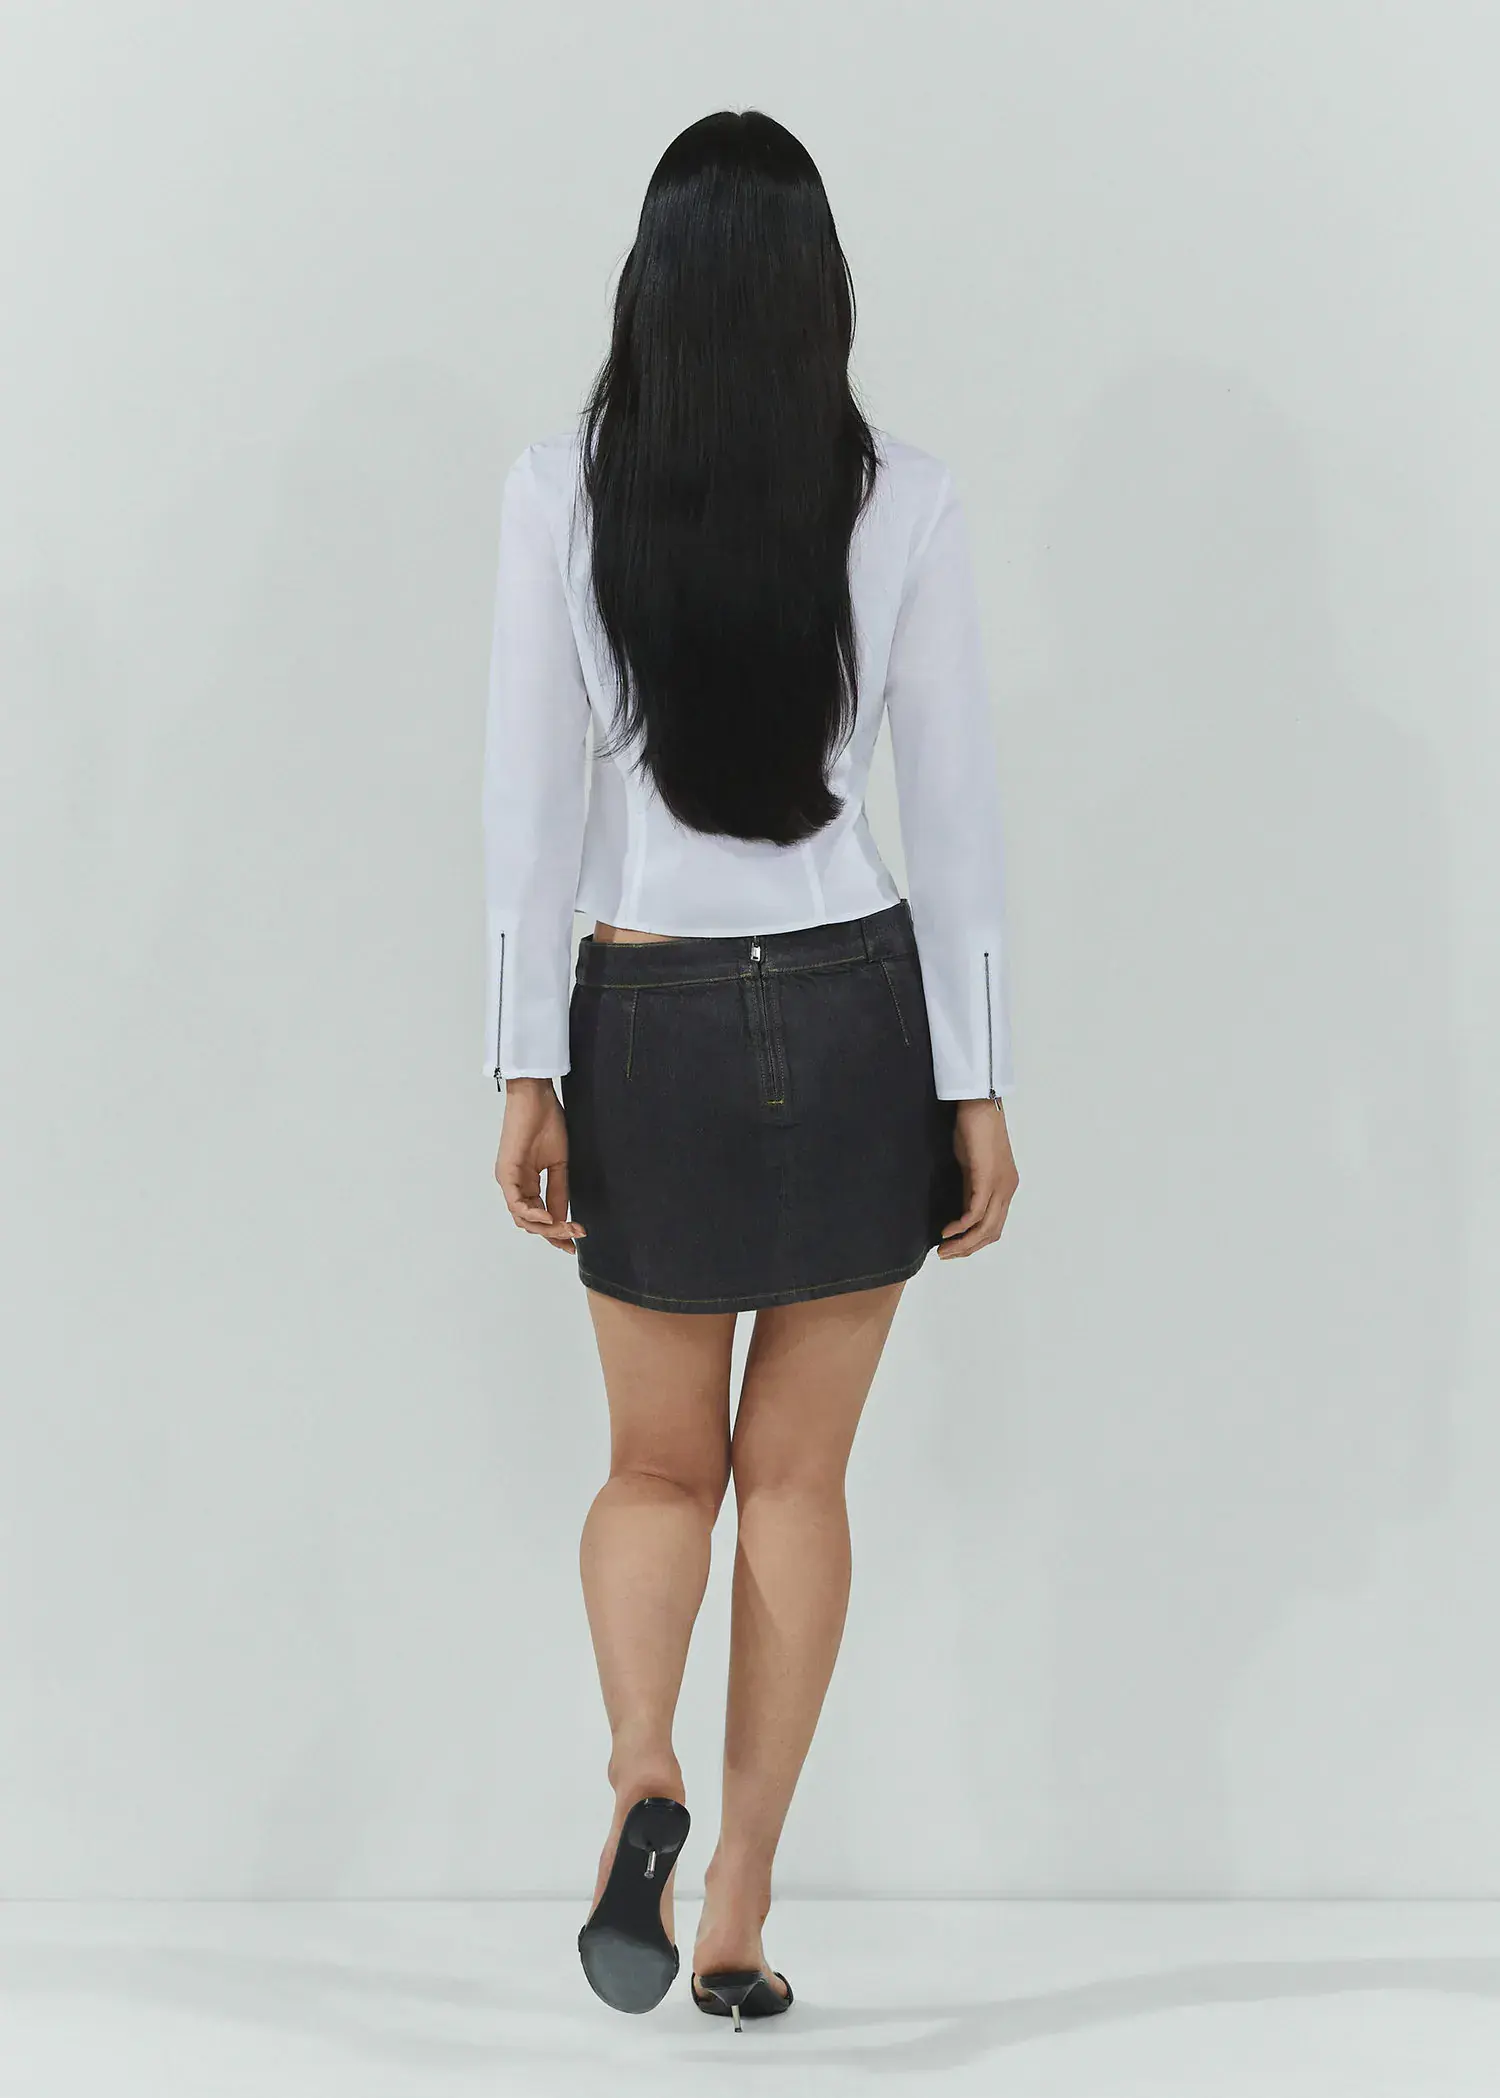 Mango Low-rise foil miniskirt. 3